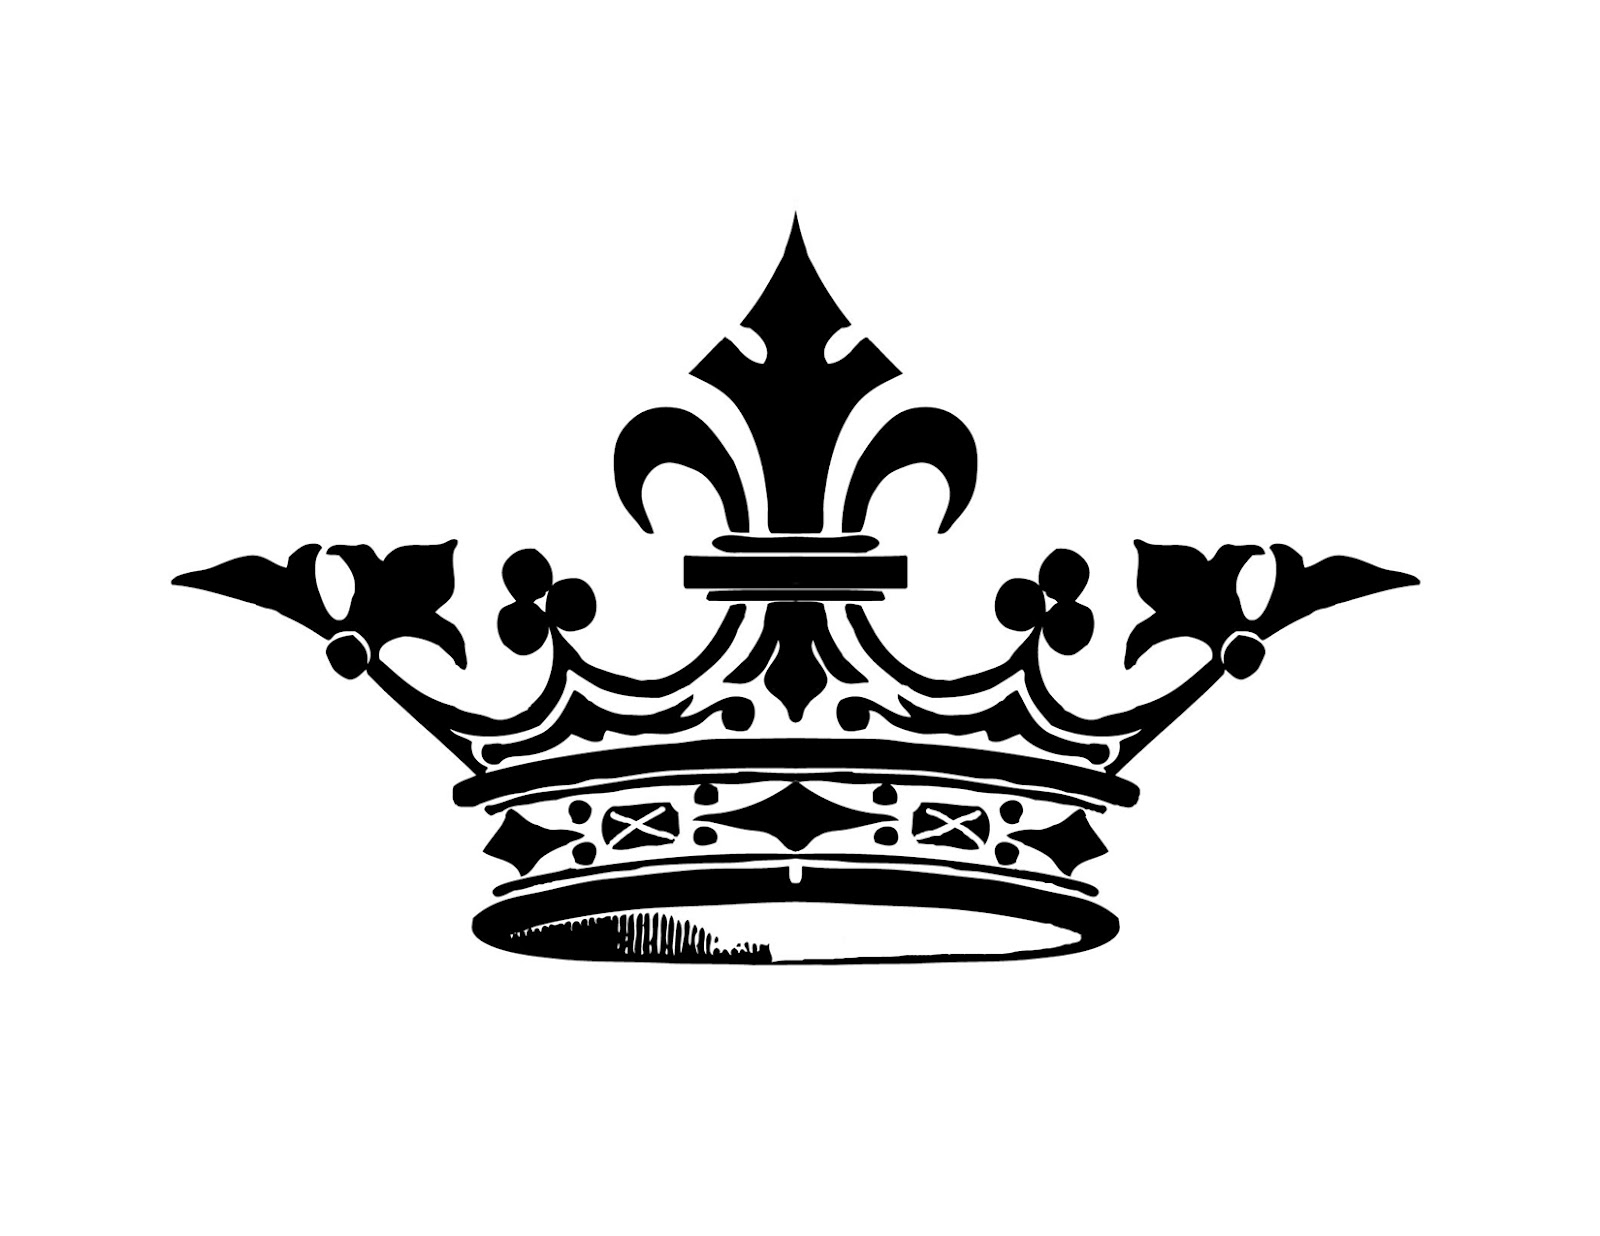 Crown-Silhouette-GraphicsFairysm.jpg